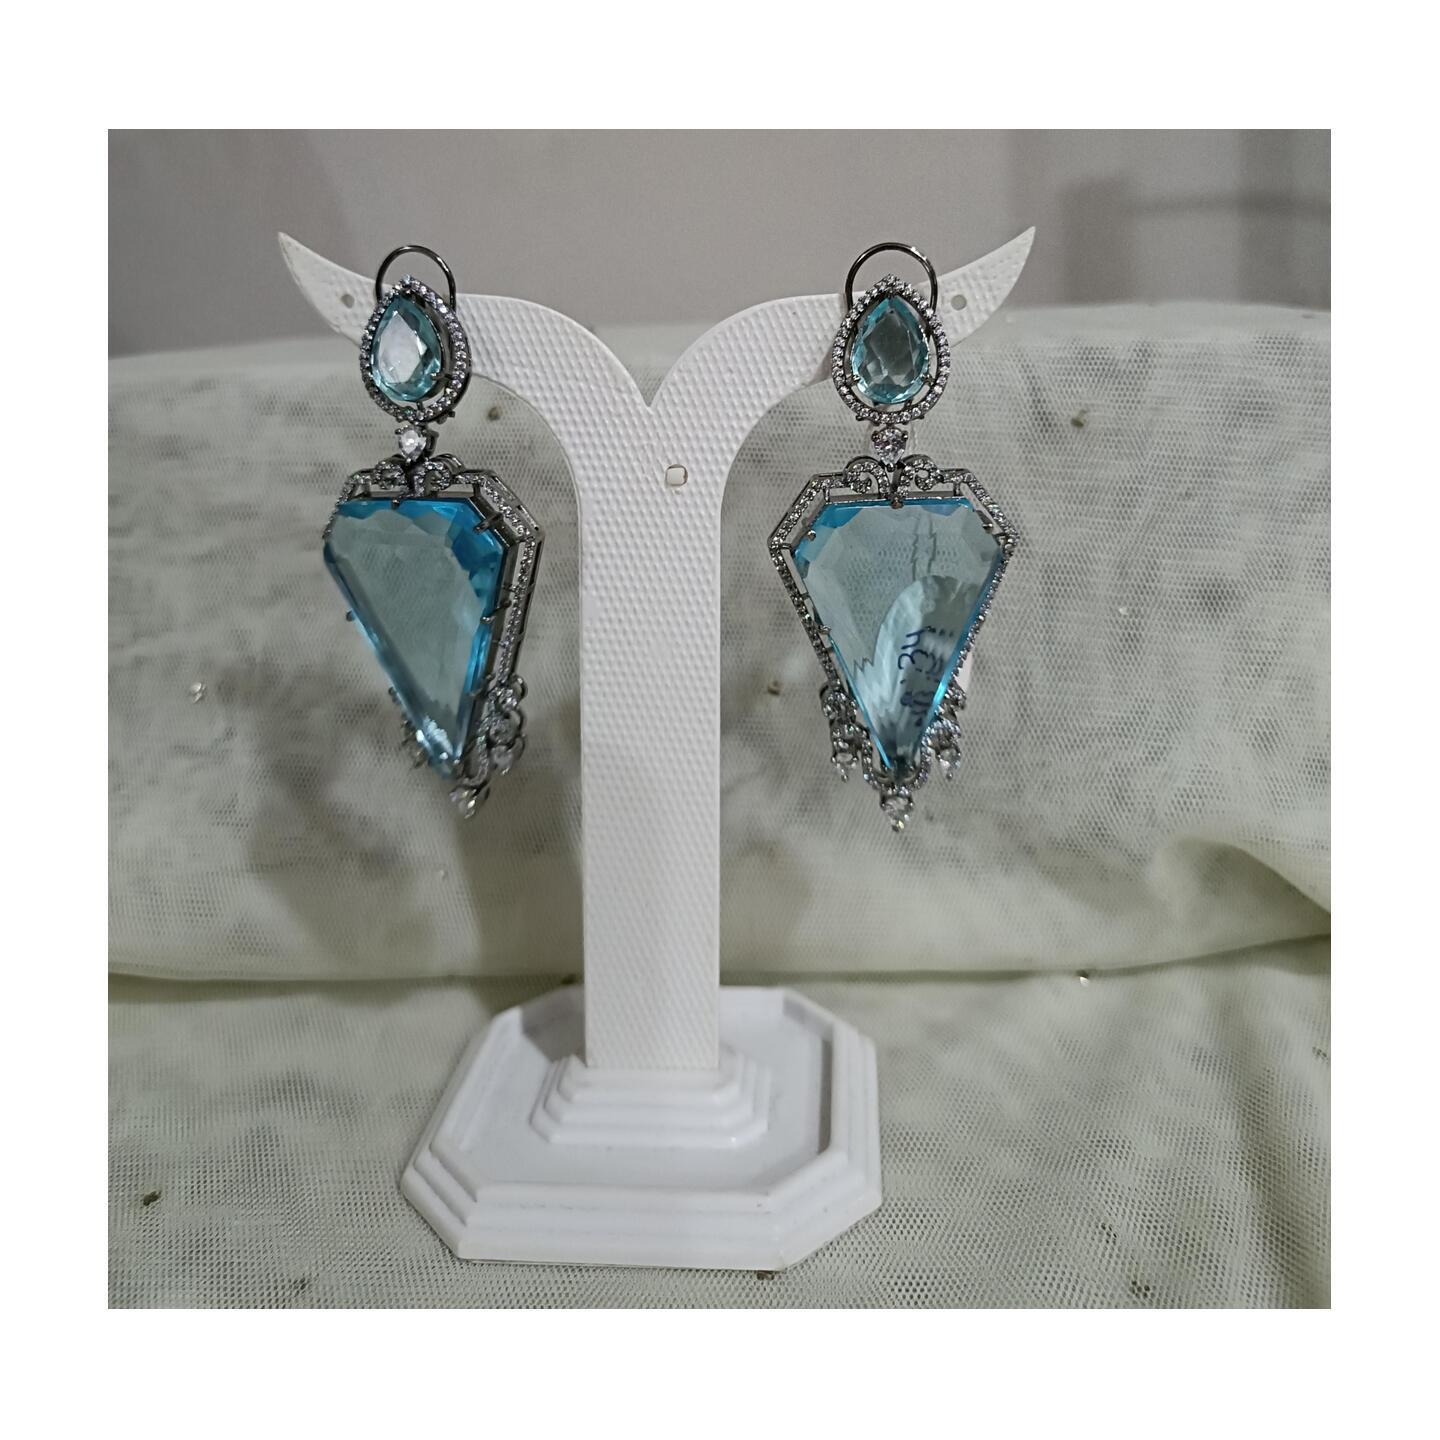 AD (American Diamond) Blue Crystal Earring